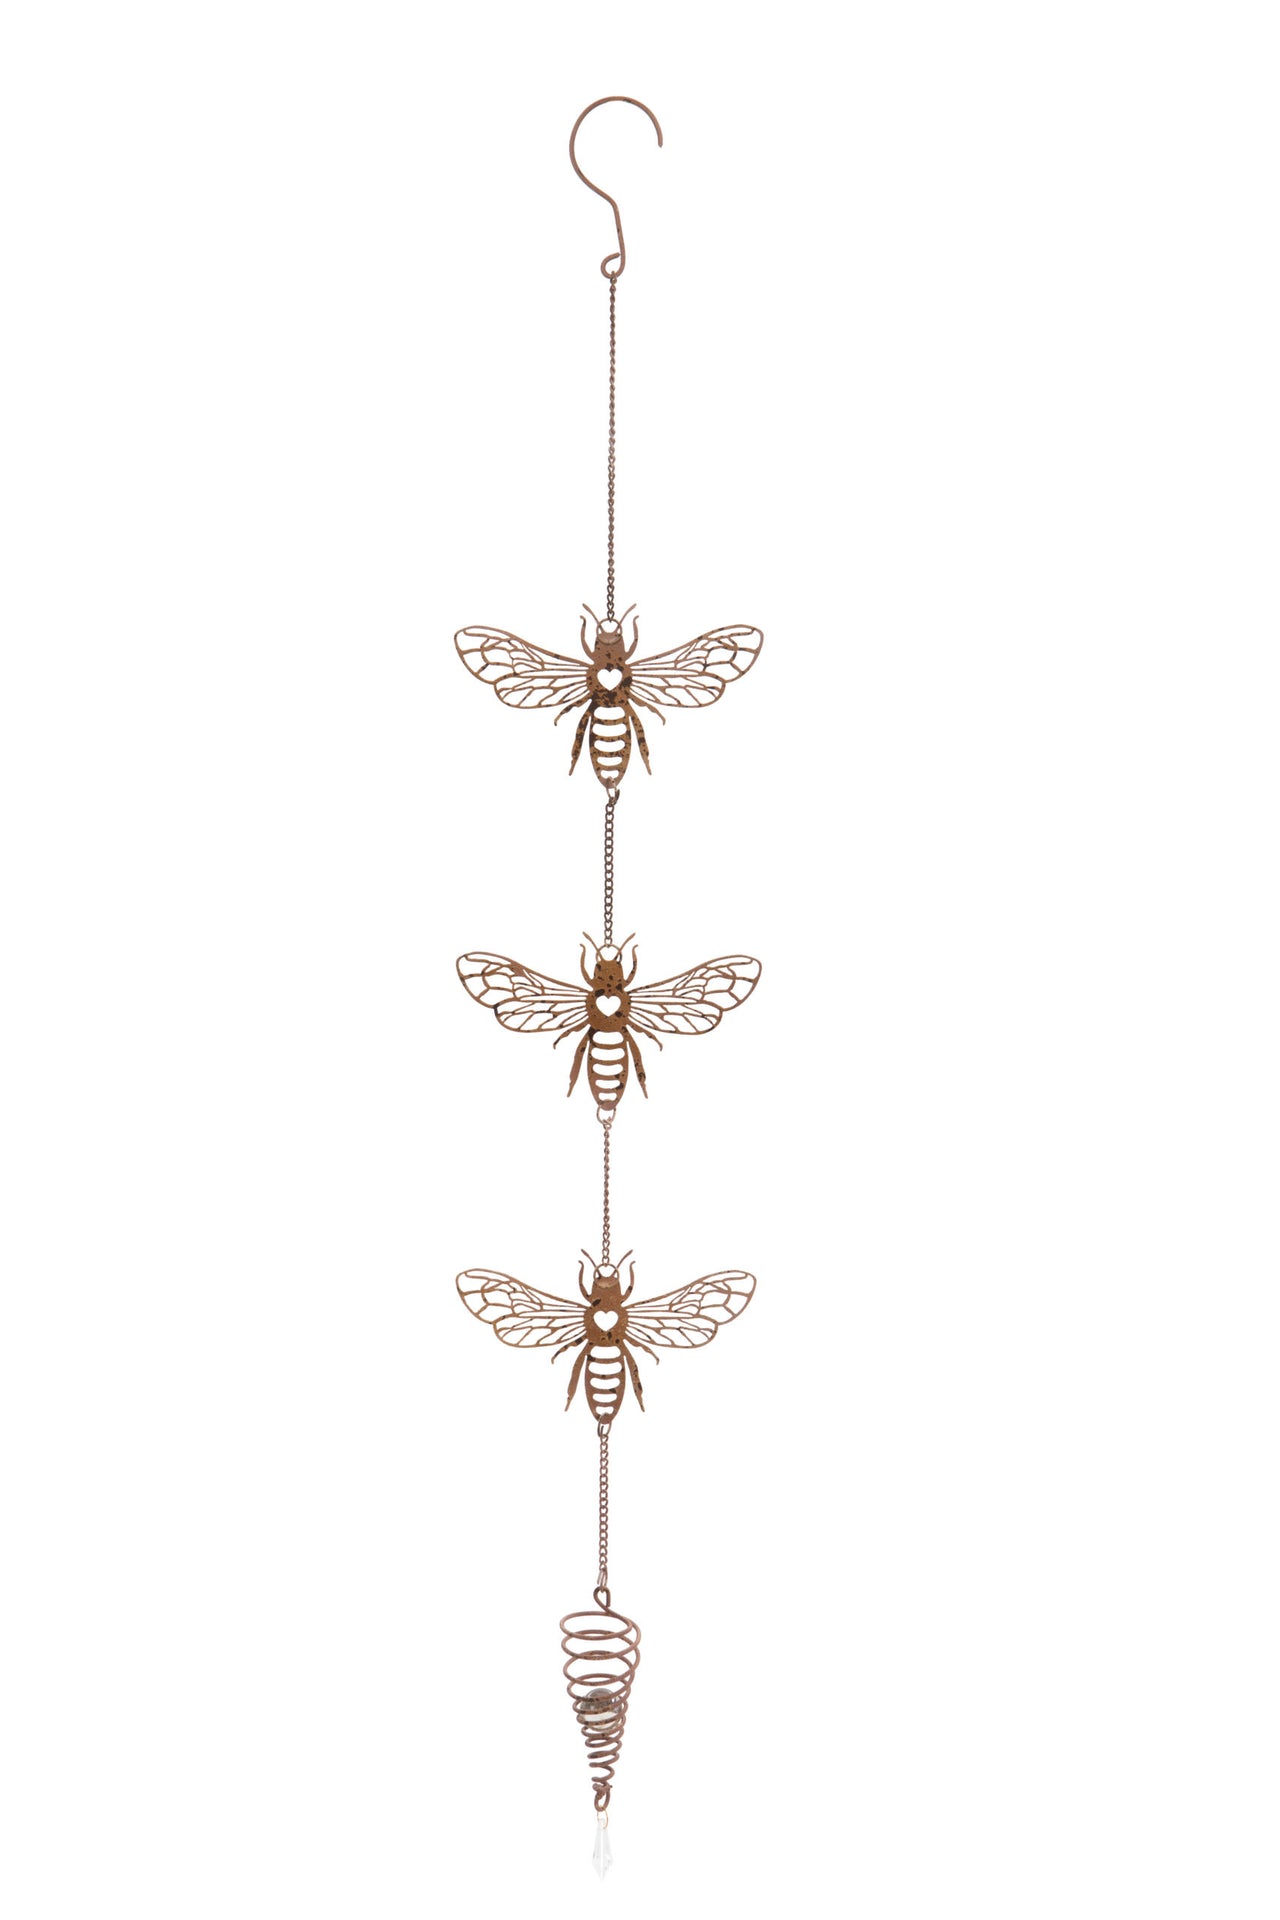 London Ornaments Bee Chain